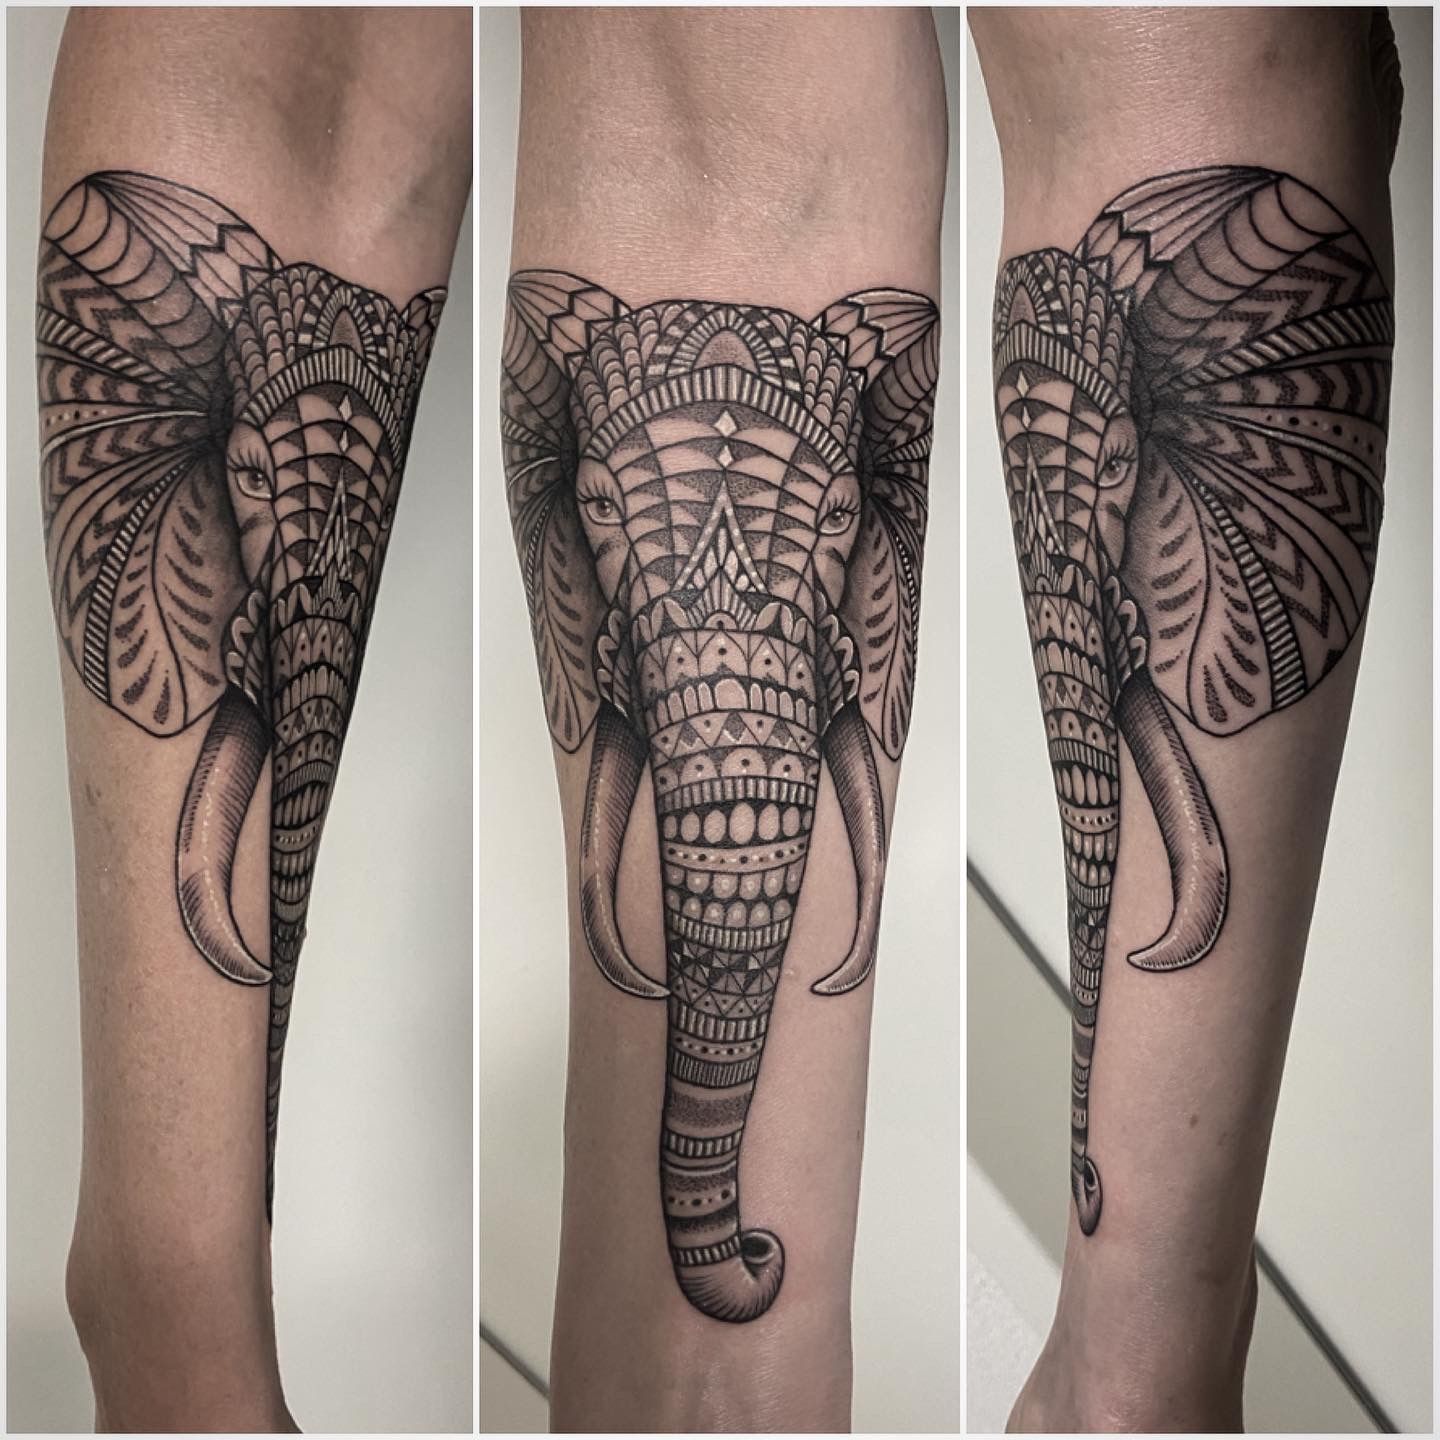 Walking Elephant in the Sun Tattoo - Black Rose Tattoo Shop